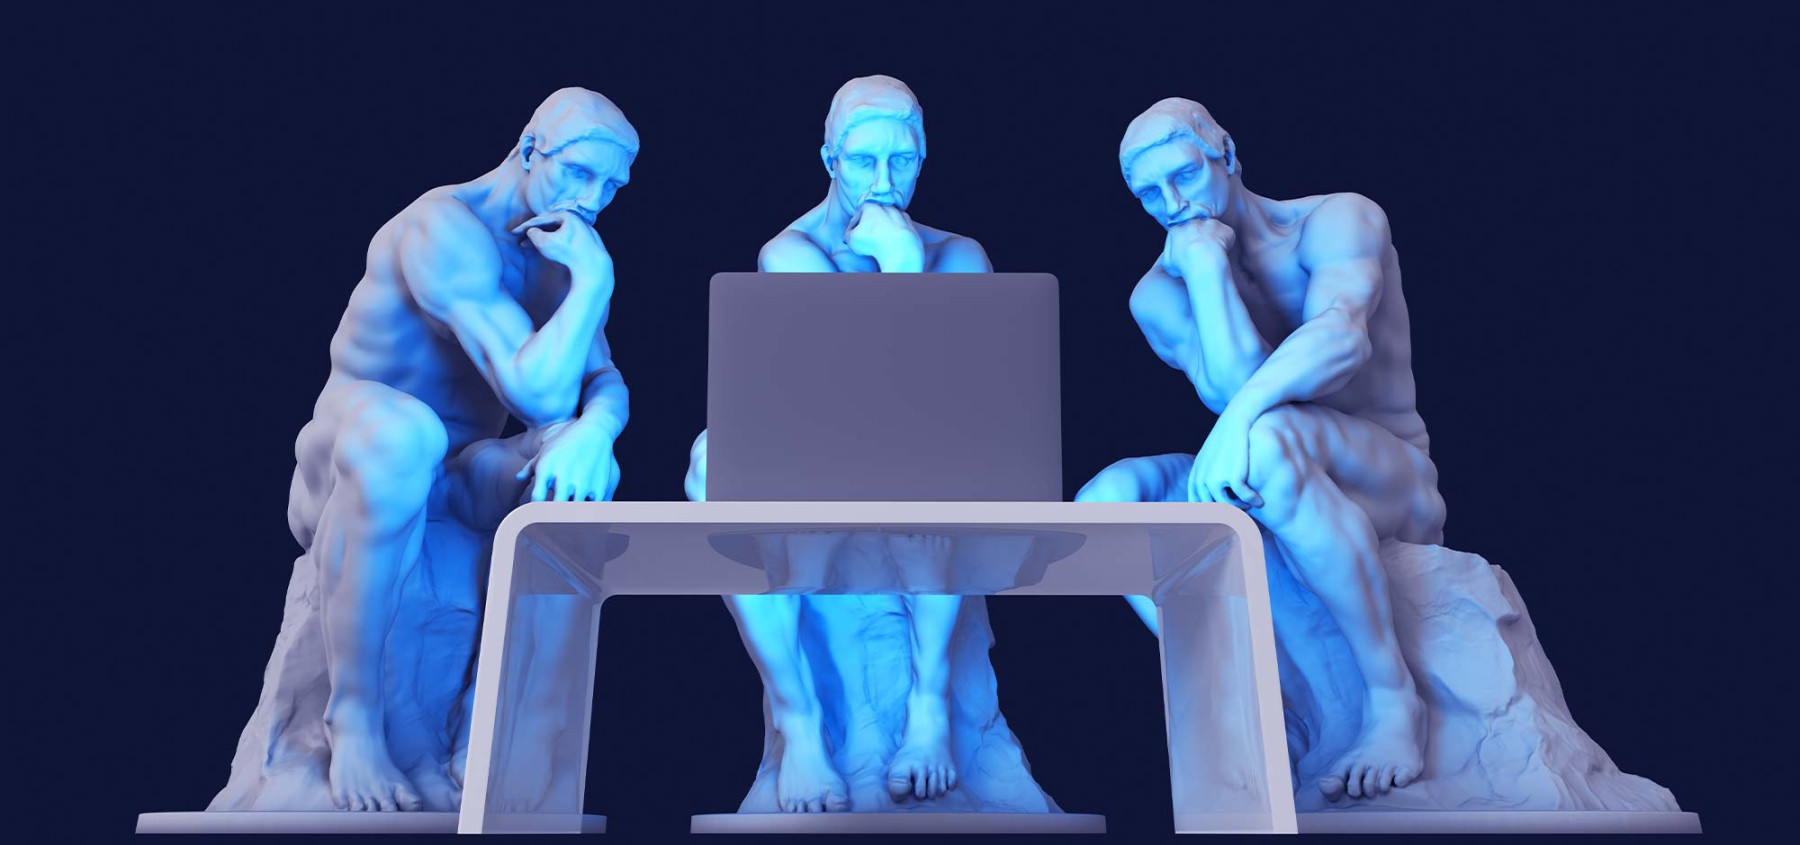 tres personas digitales pensando frente a un ordenador portatil